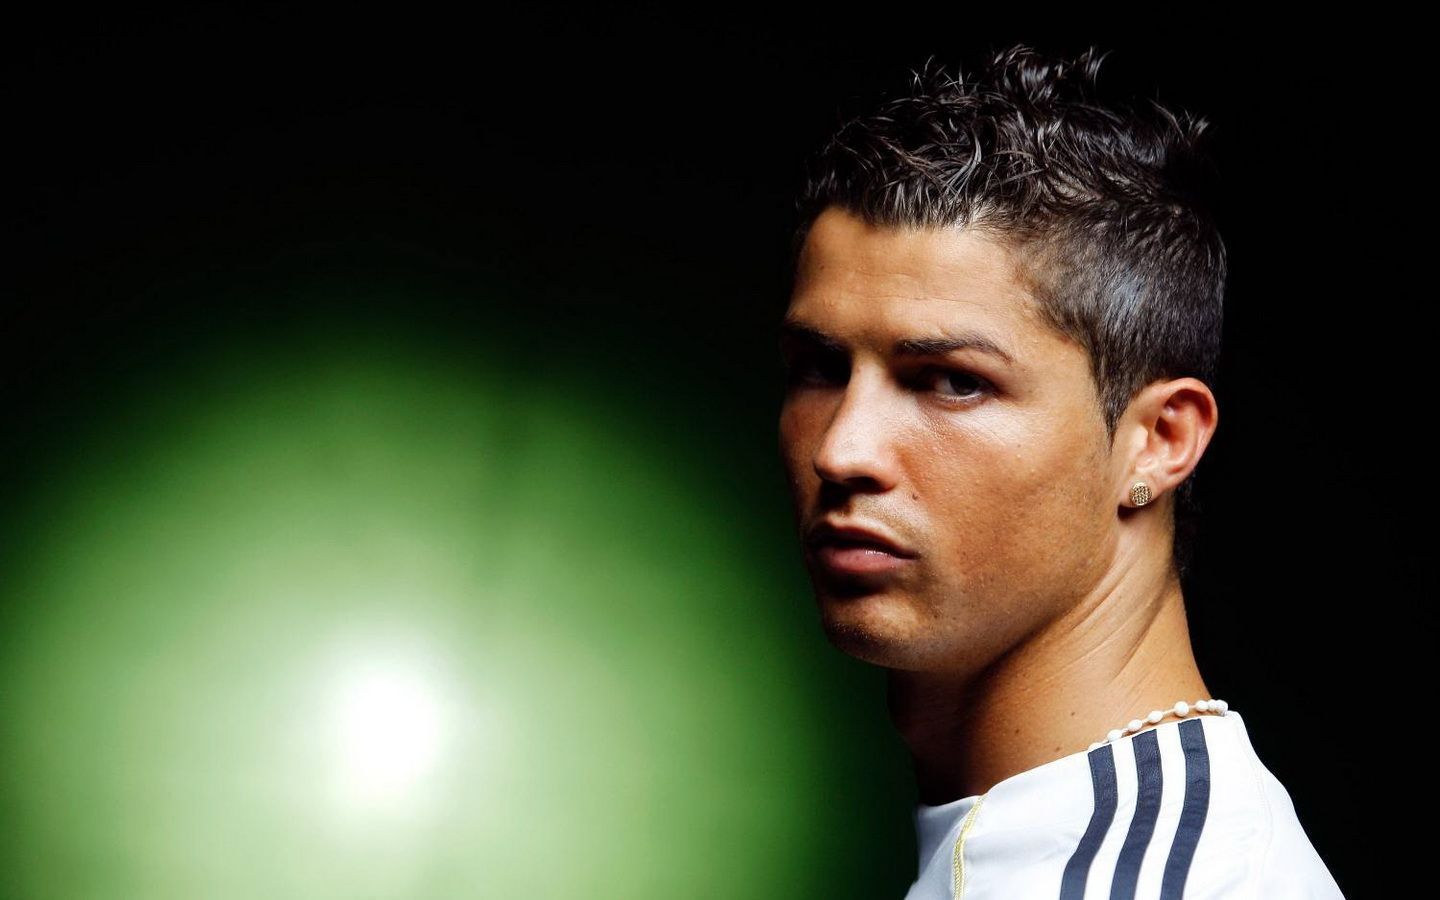 Cristiano Ronaldo Profil Wallpaper Images Wallpaper High resolution